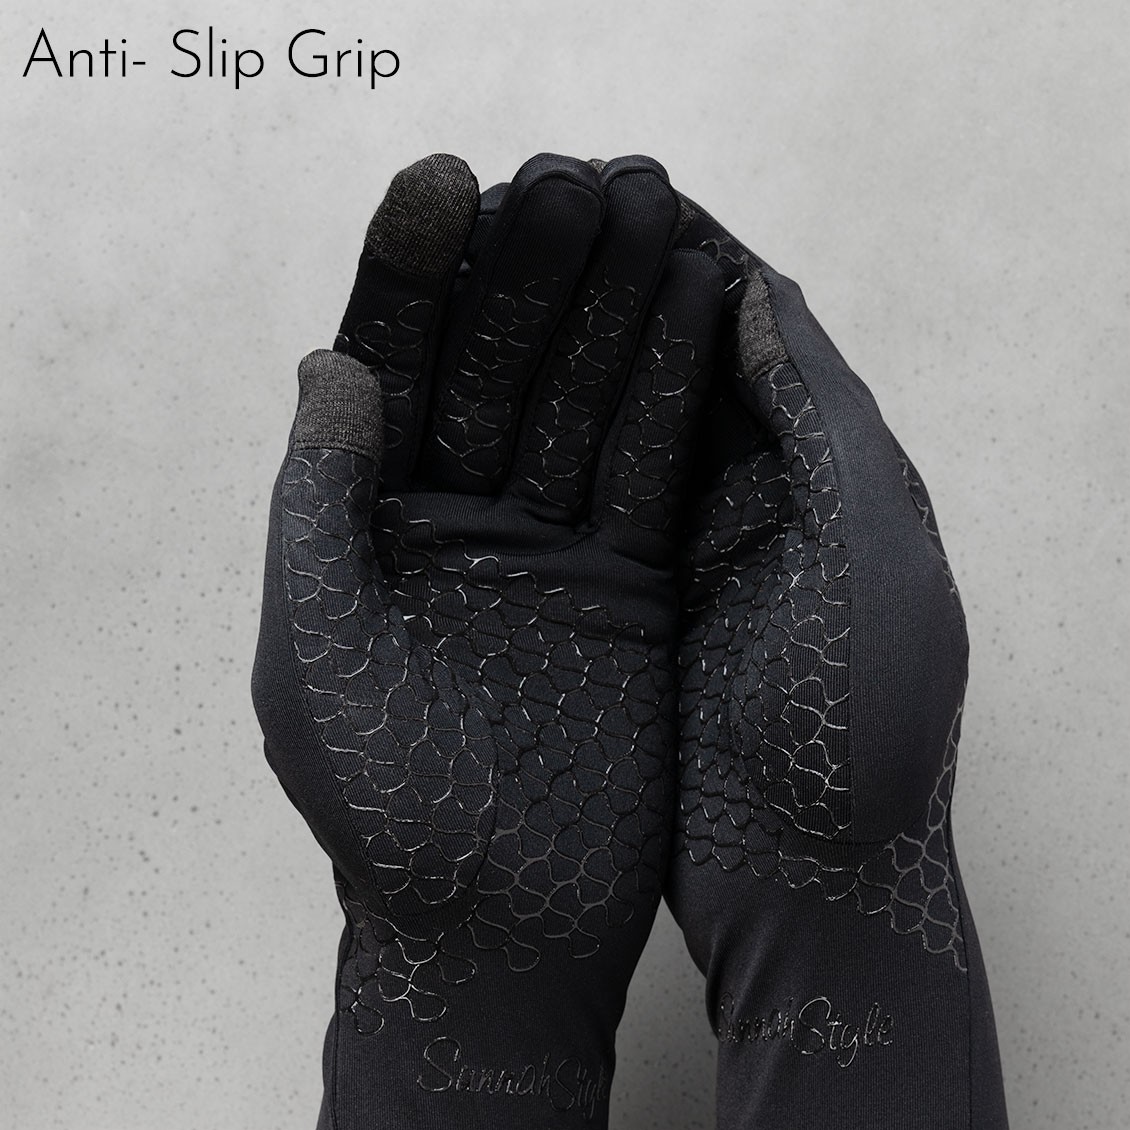 Sunnah Style Esteem Signature Gloves v2 Wrist Length Anti Slip Grip